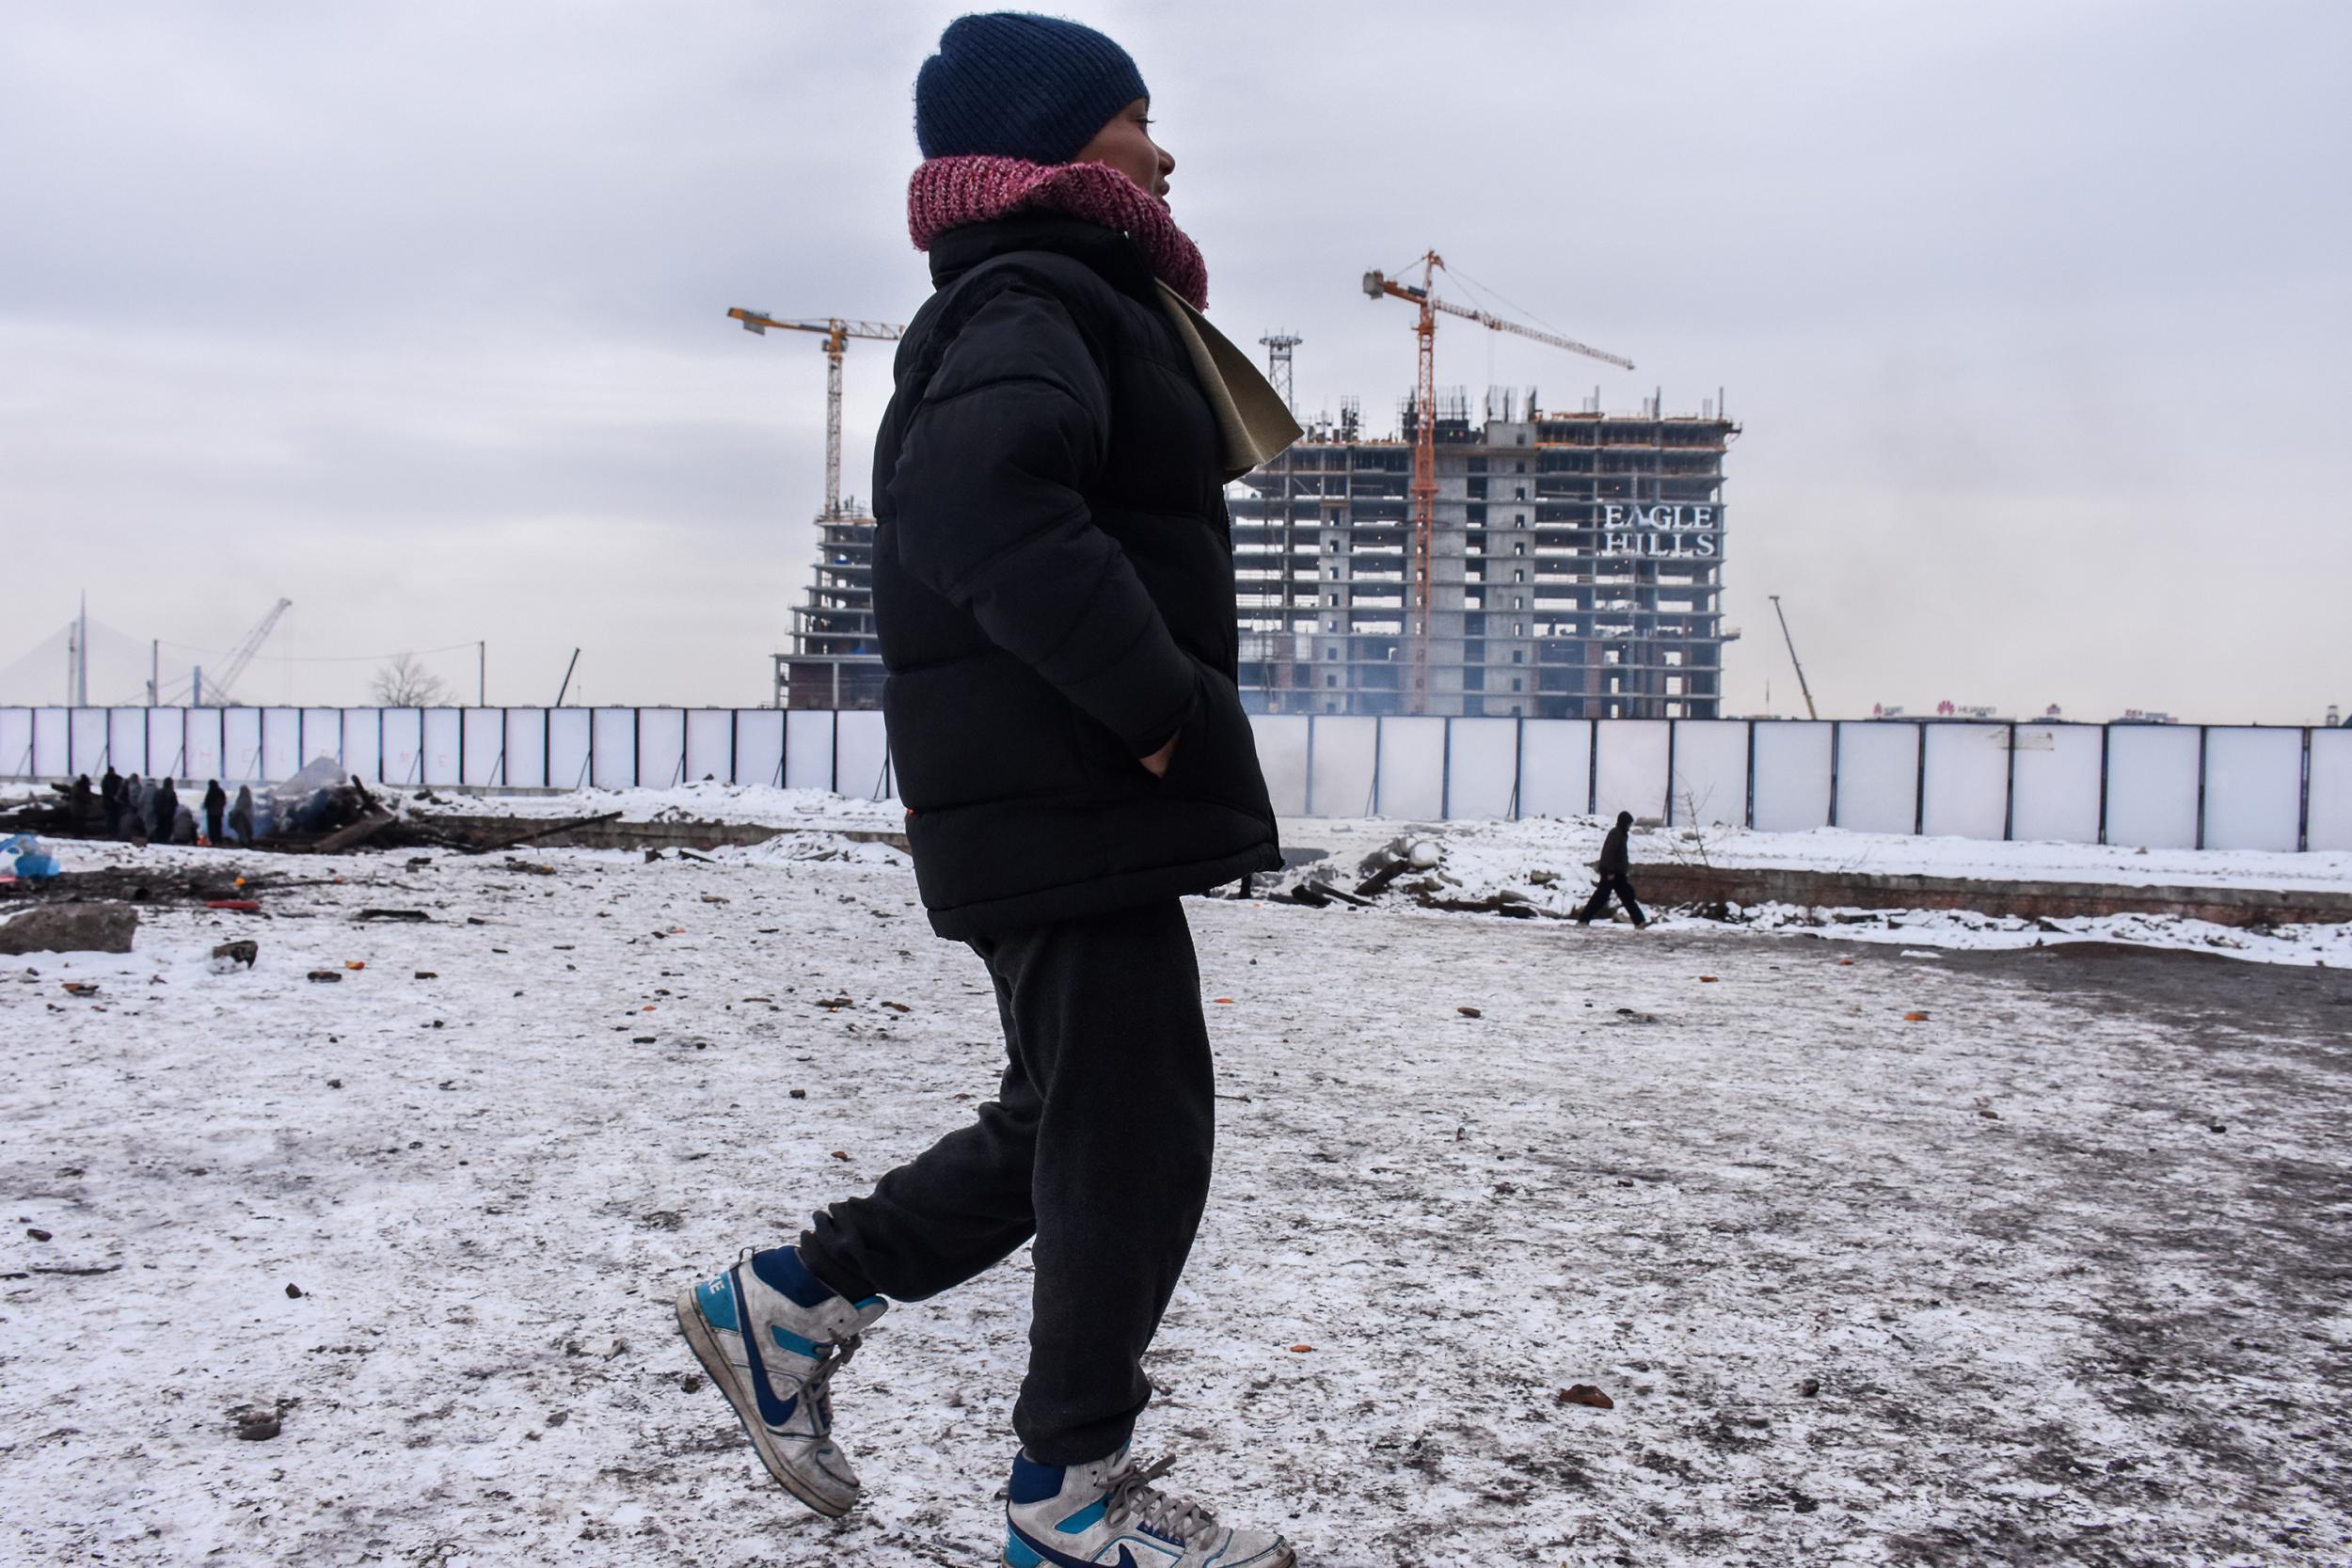 A homeless refugee boy in Belgrade endures freezing conditions